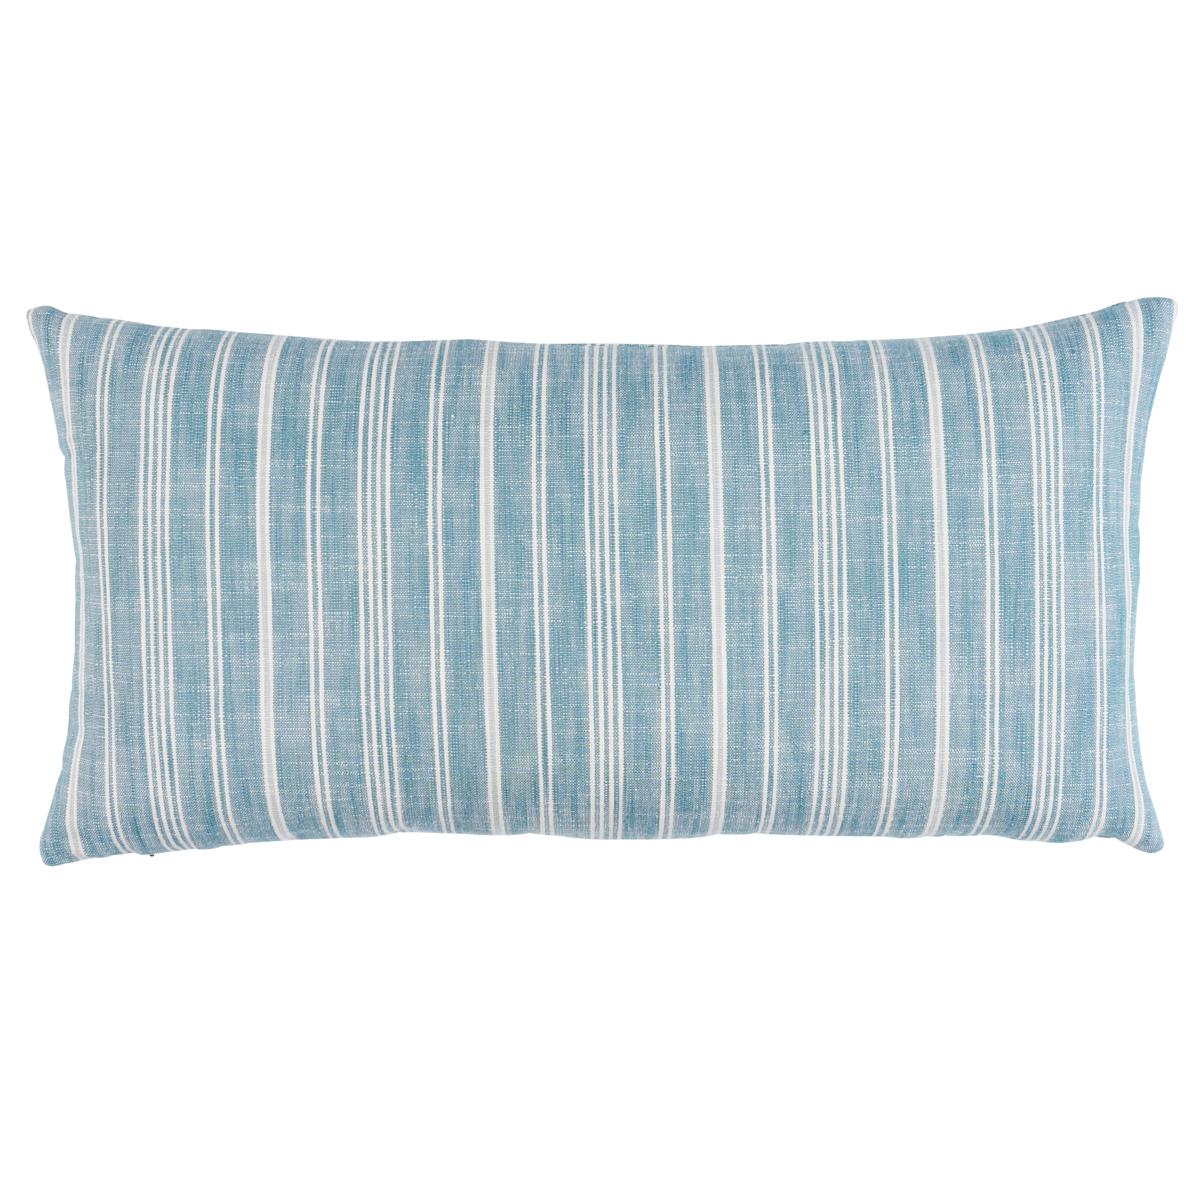 Lucy Stripe Pillow in Indigo 24 x 12"